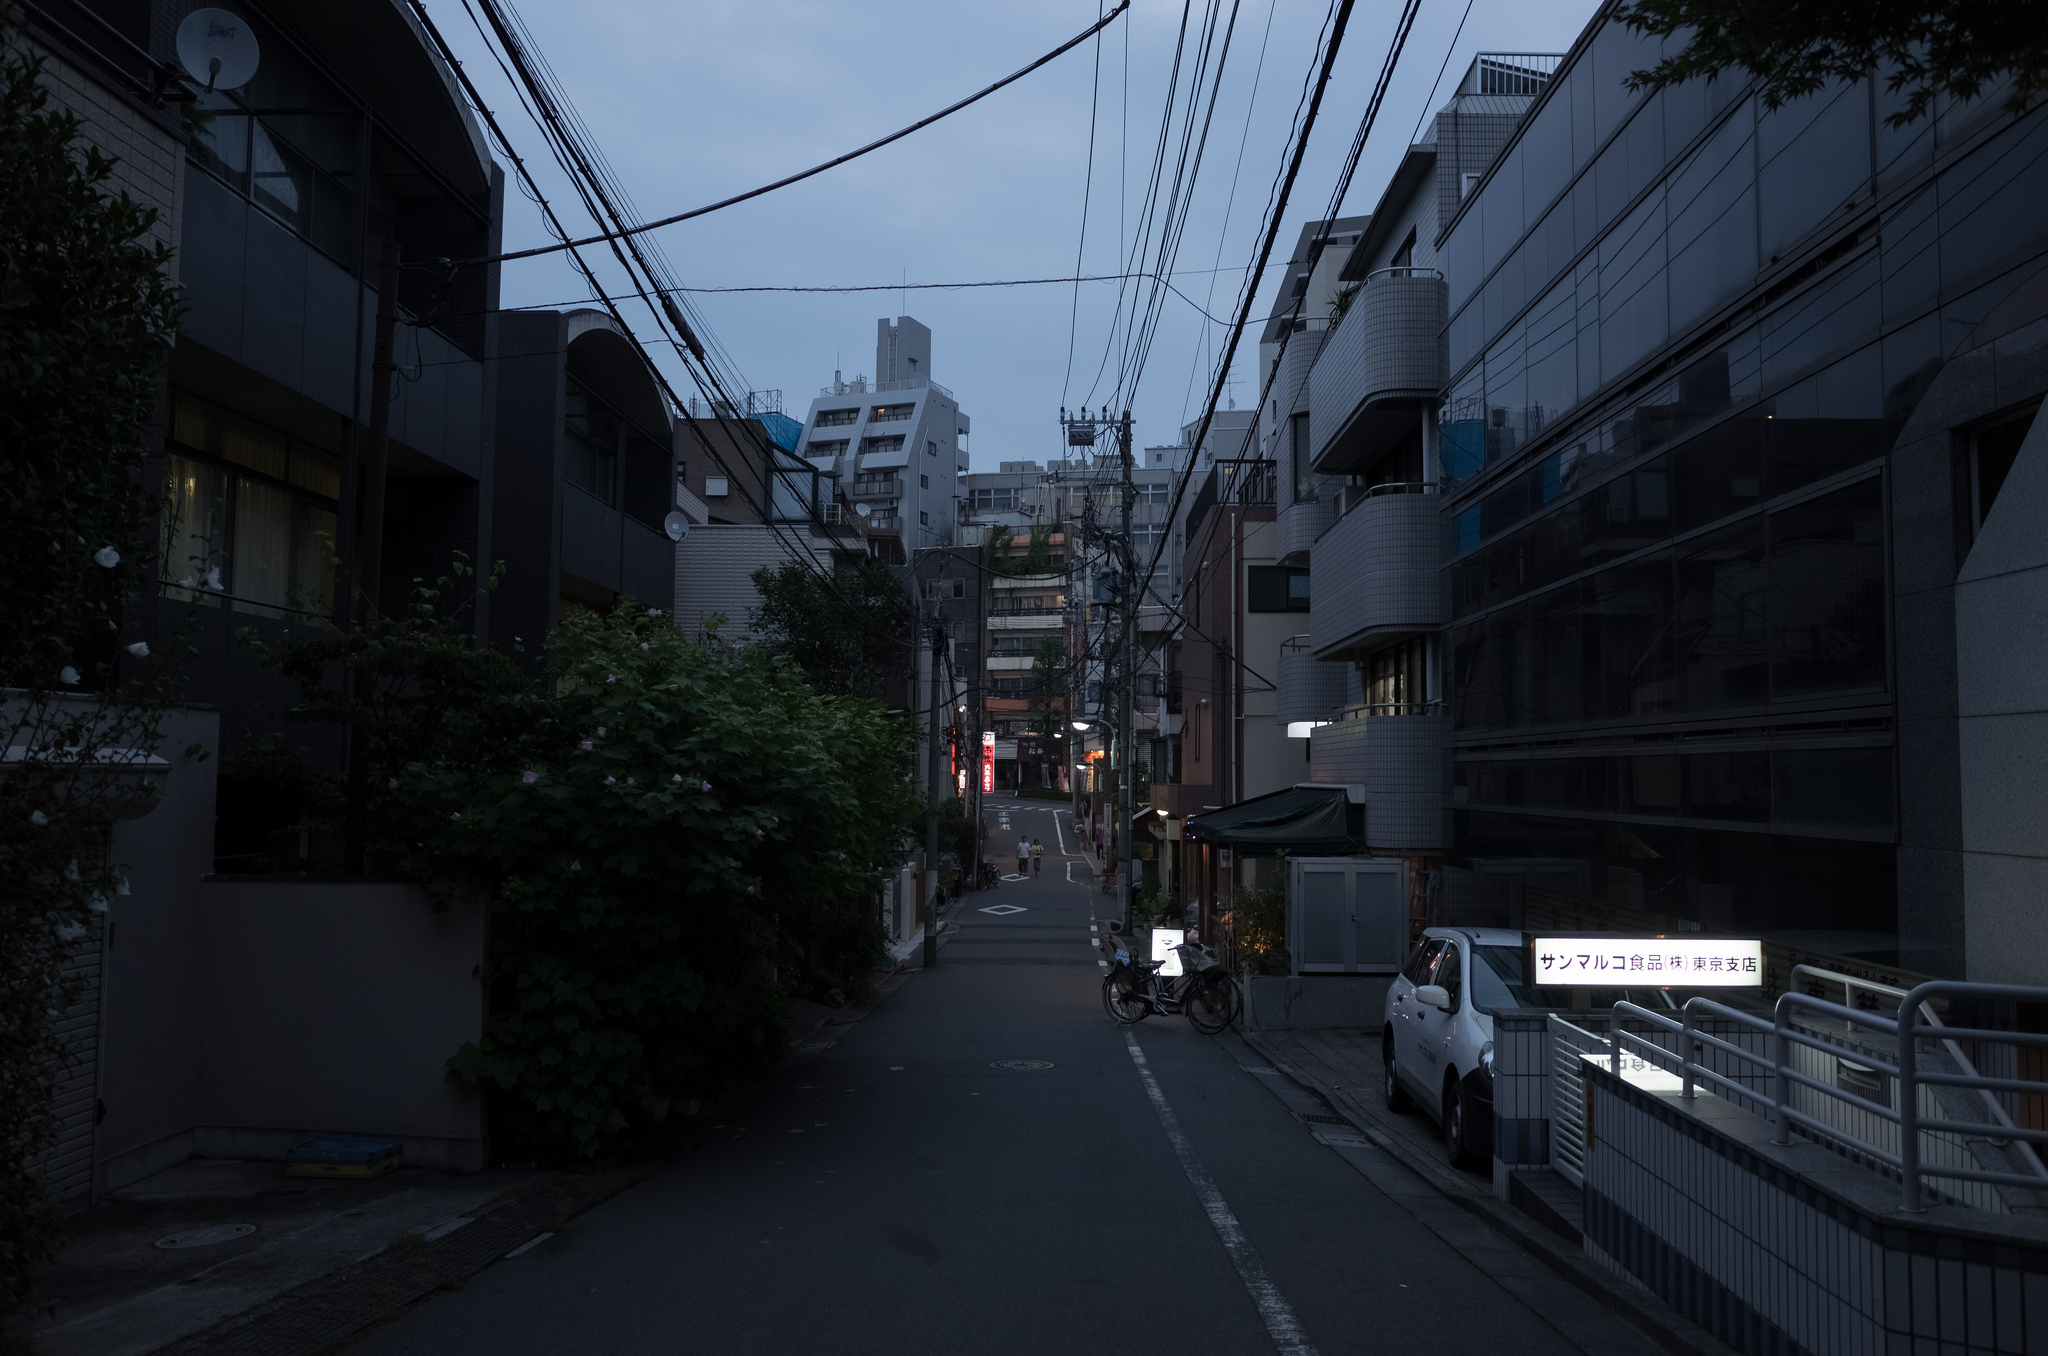 General 2048x1356 Japan street lights dark cityscape urban